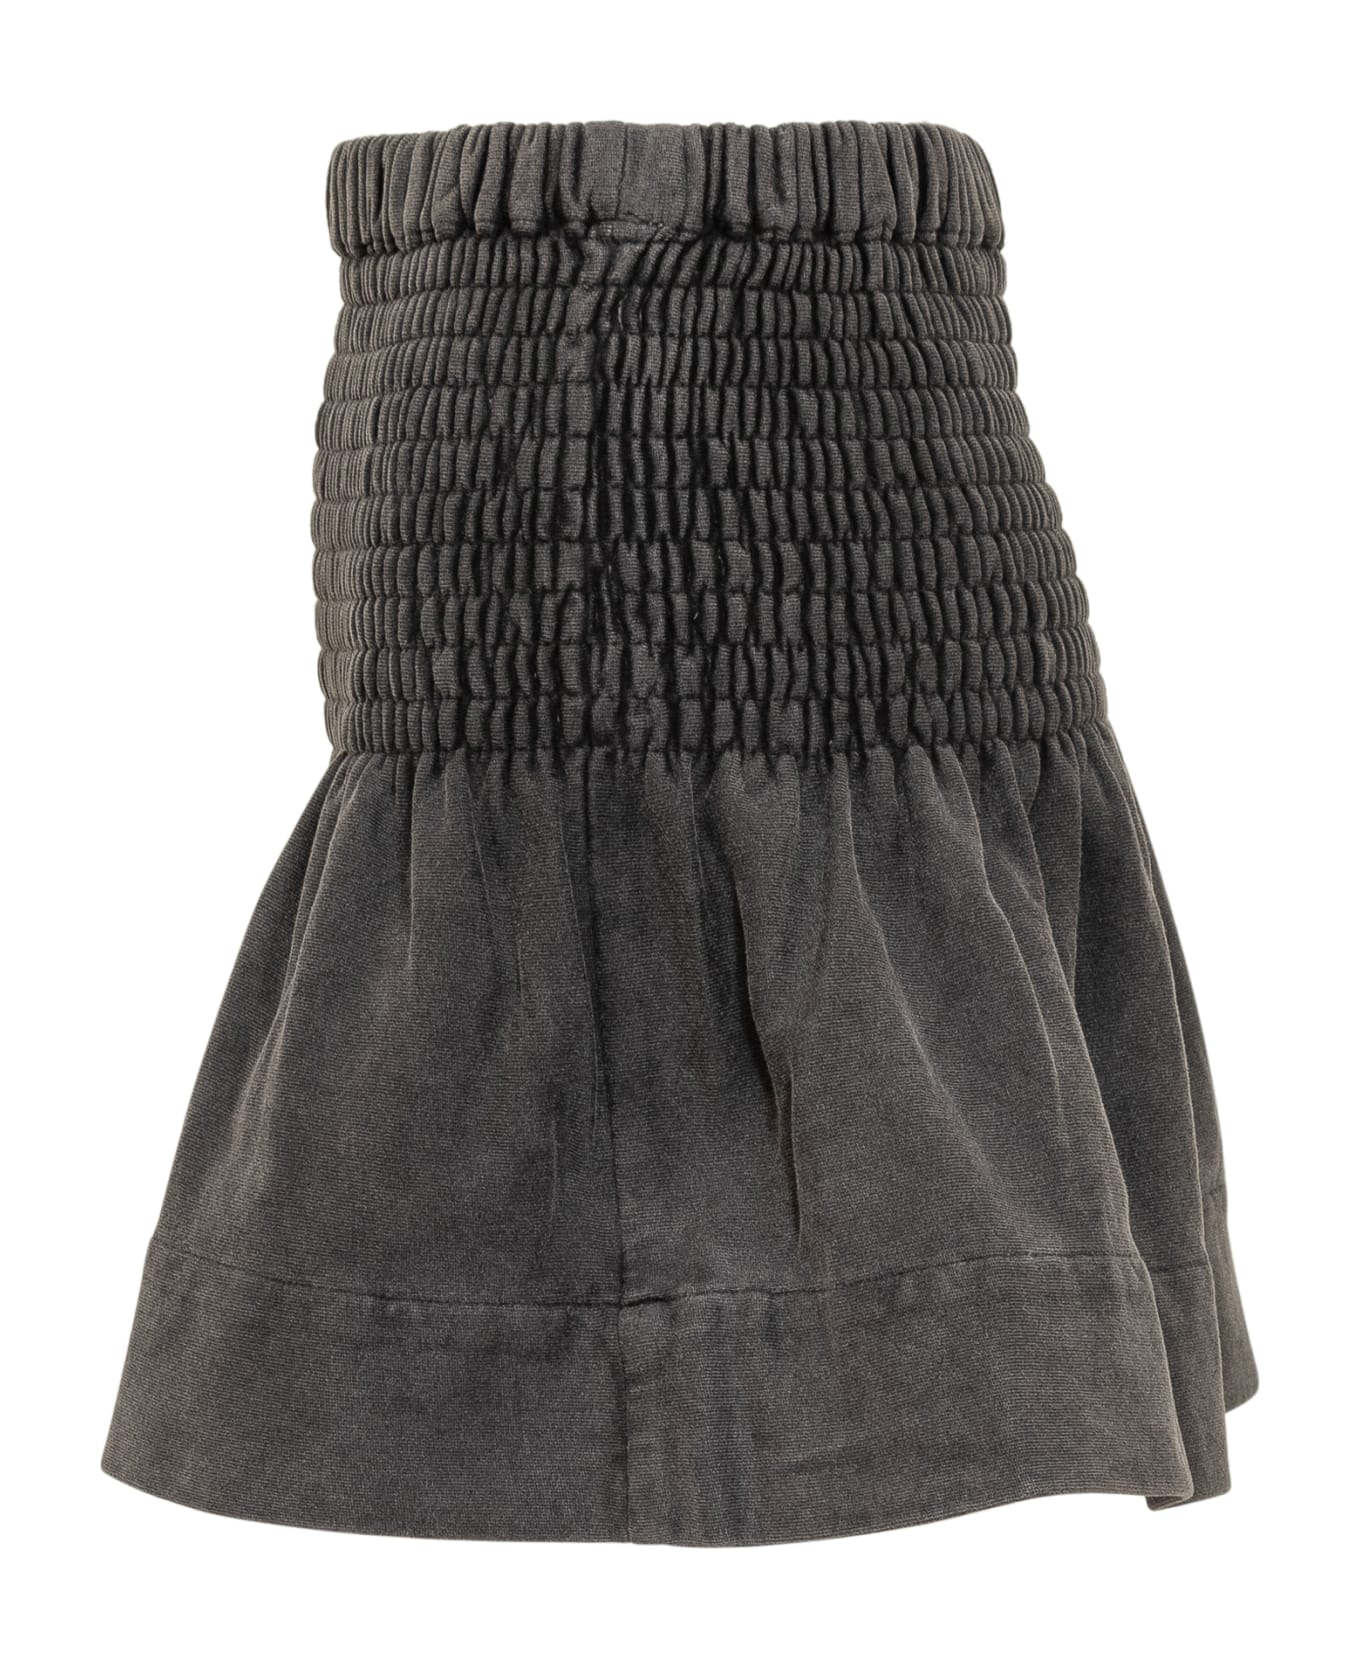 Marant Étoile Pacifica Skirt - Fk Faded Black